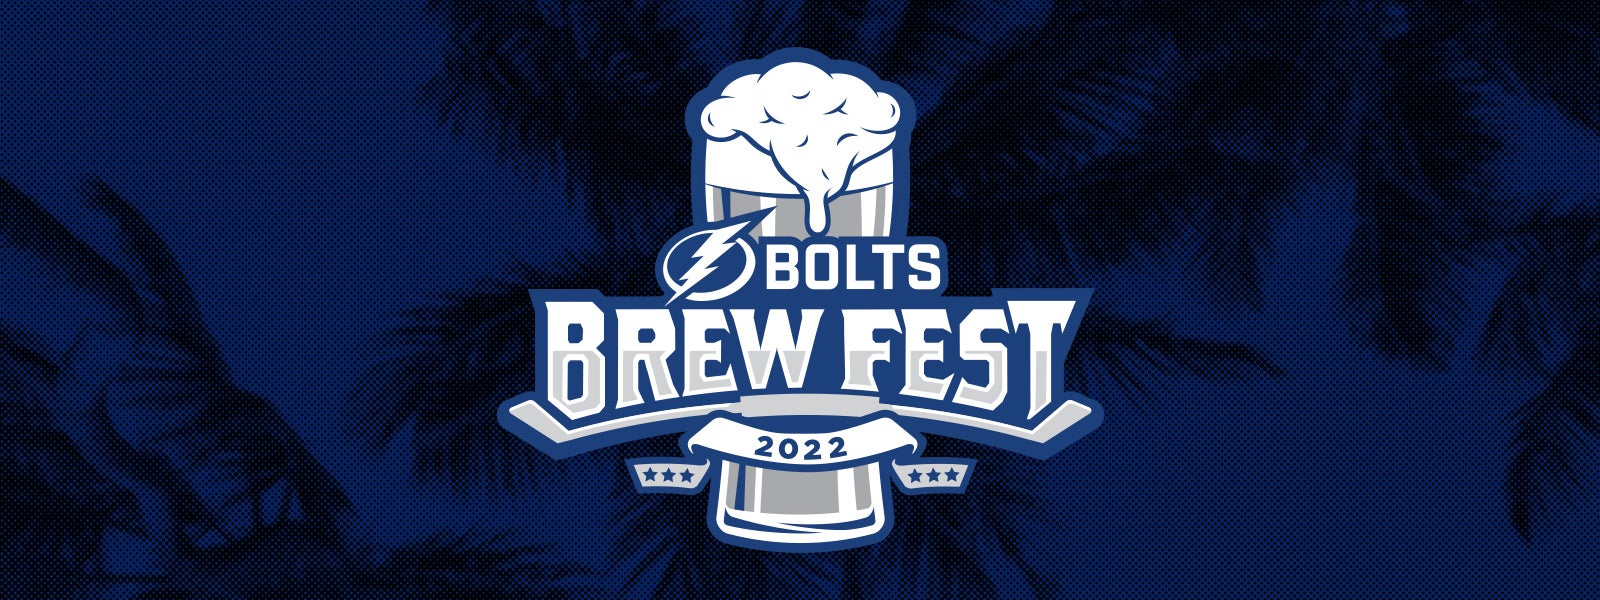 Bolts Brew Fest